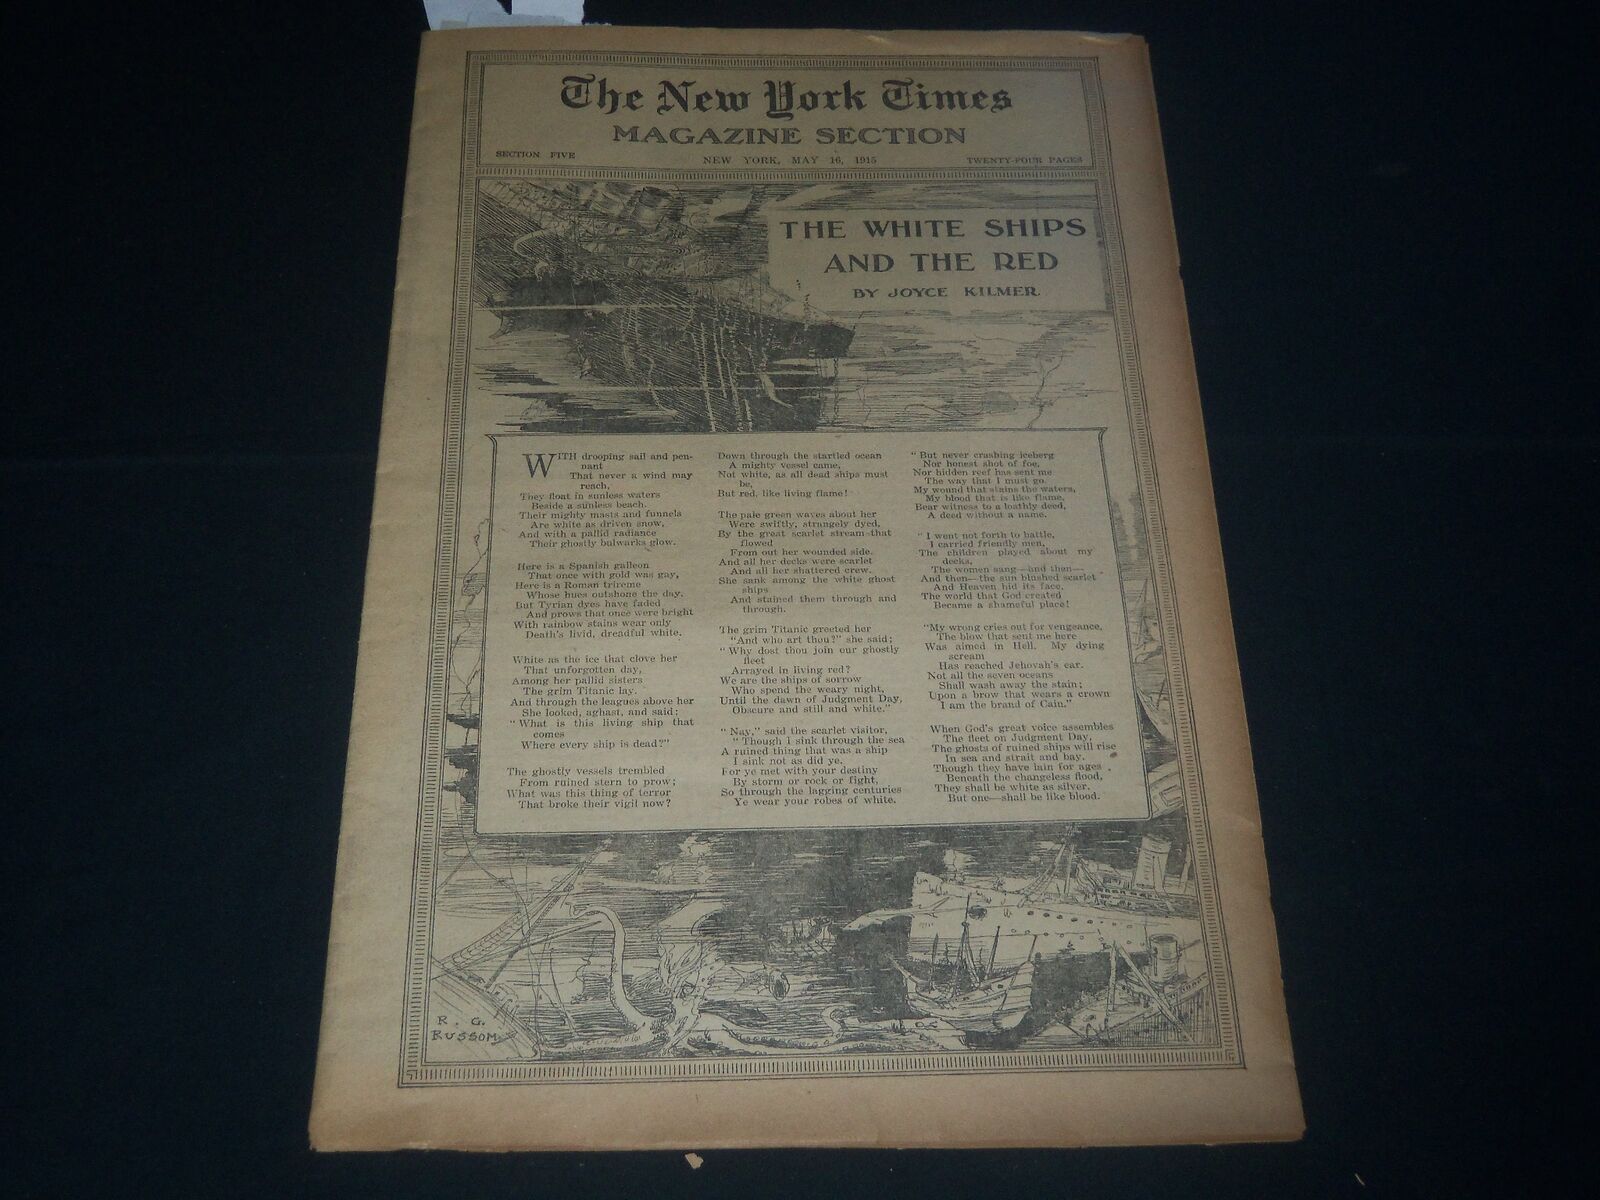 1915 MAY 16 NEW YORK TIMES MAGAZINE SECTION- WHITE SHIPS -JOYCE KILMER - NP 972M